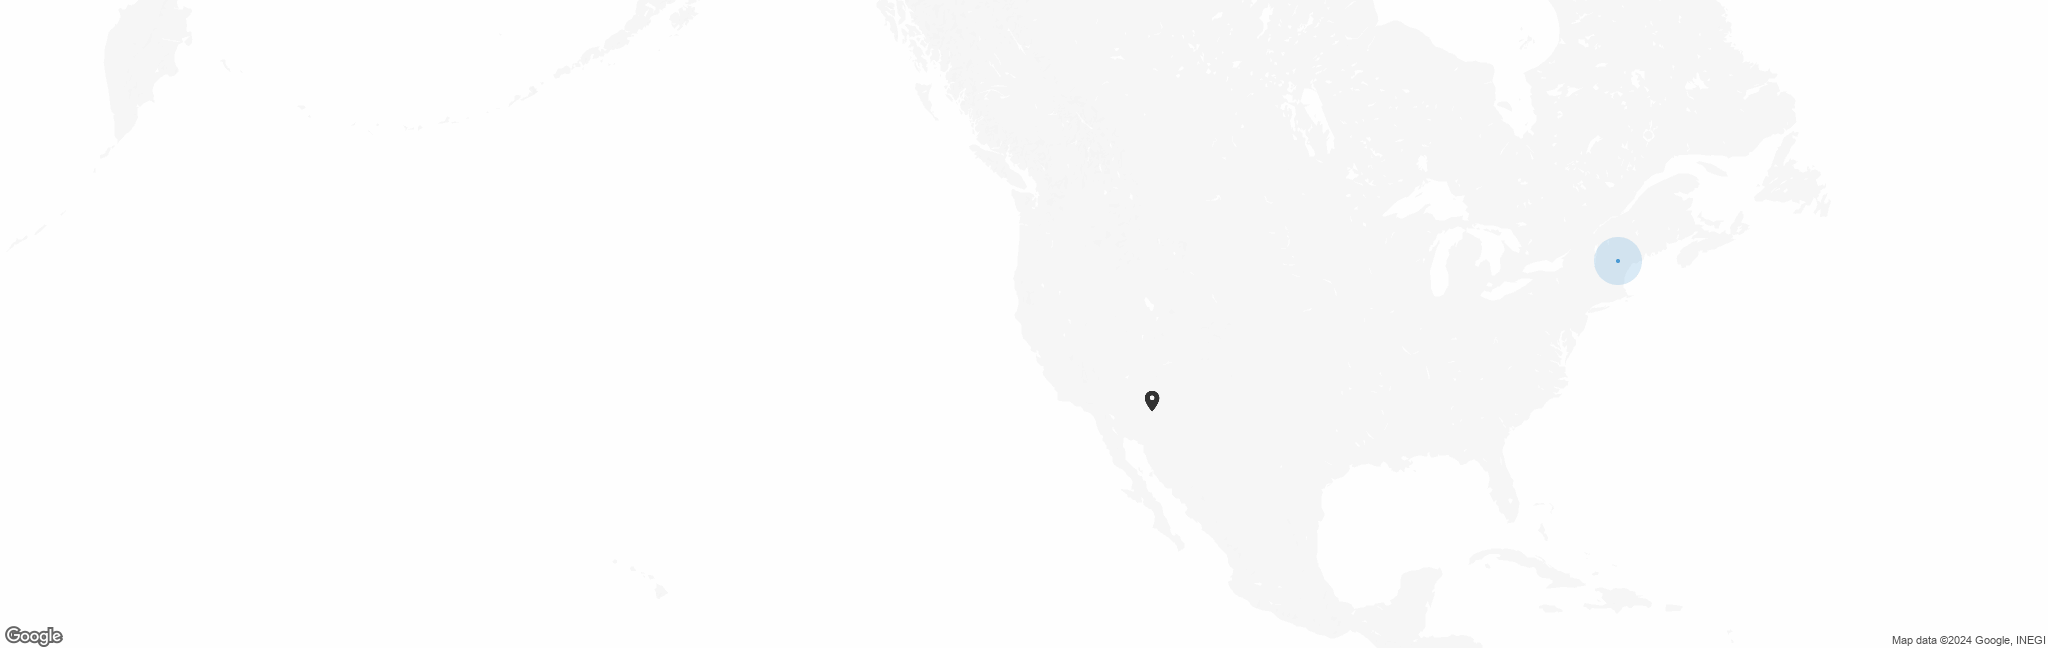 Map of US with pin of Meningitis Foundation of America, Inc. location